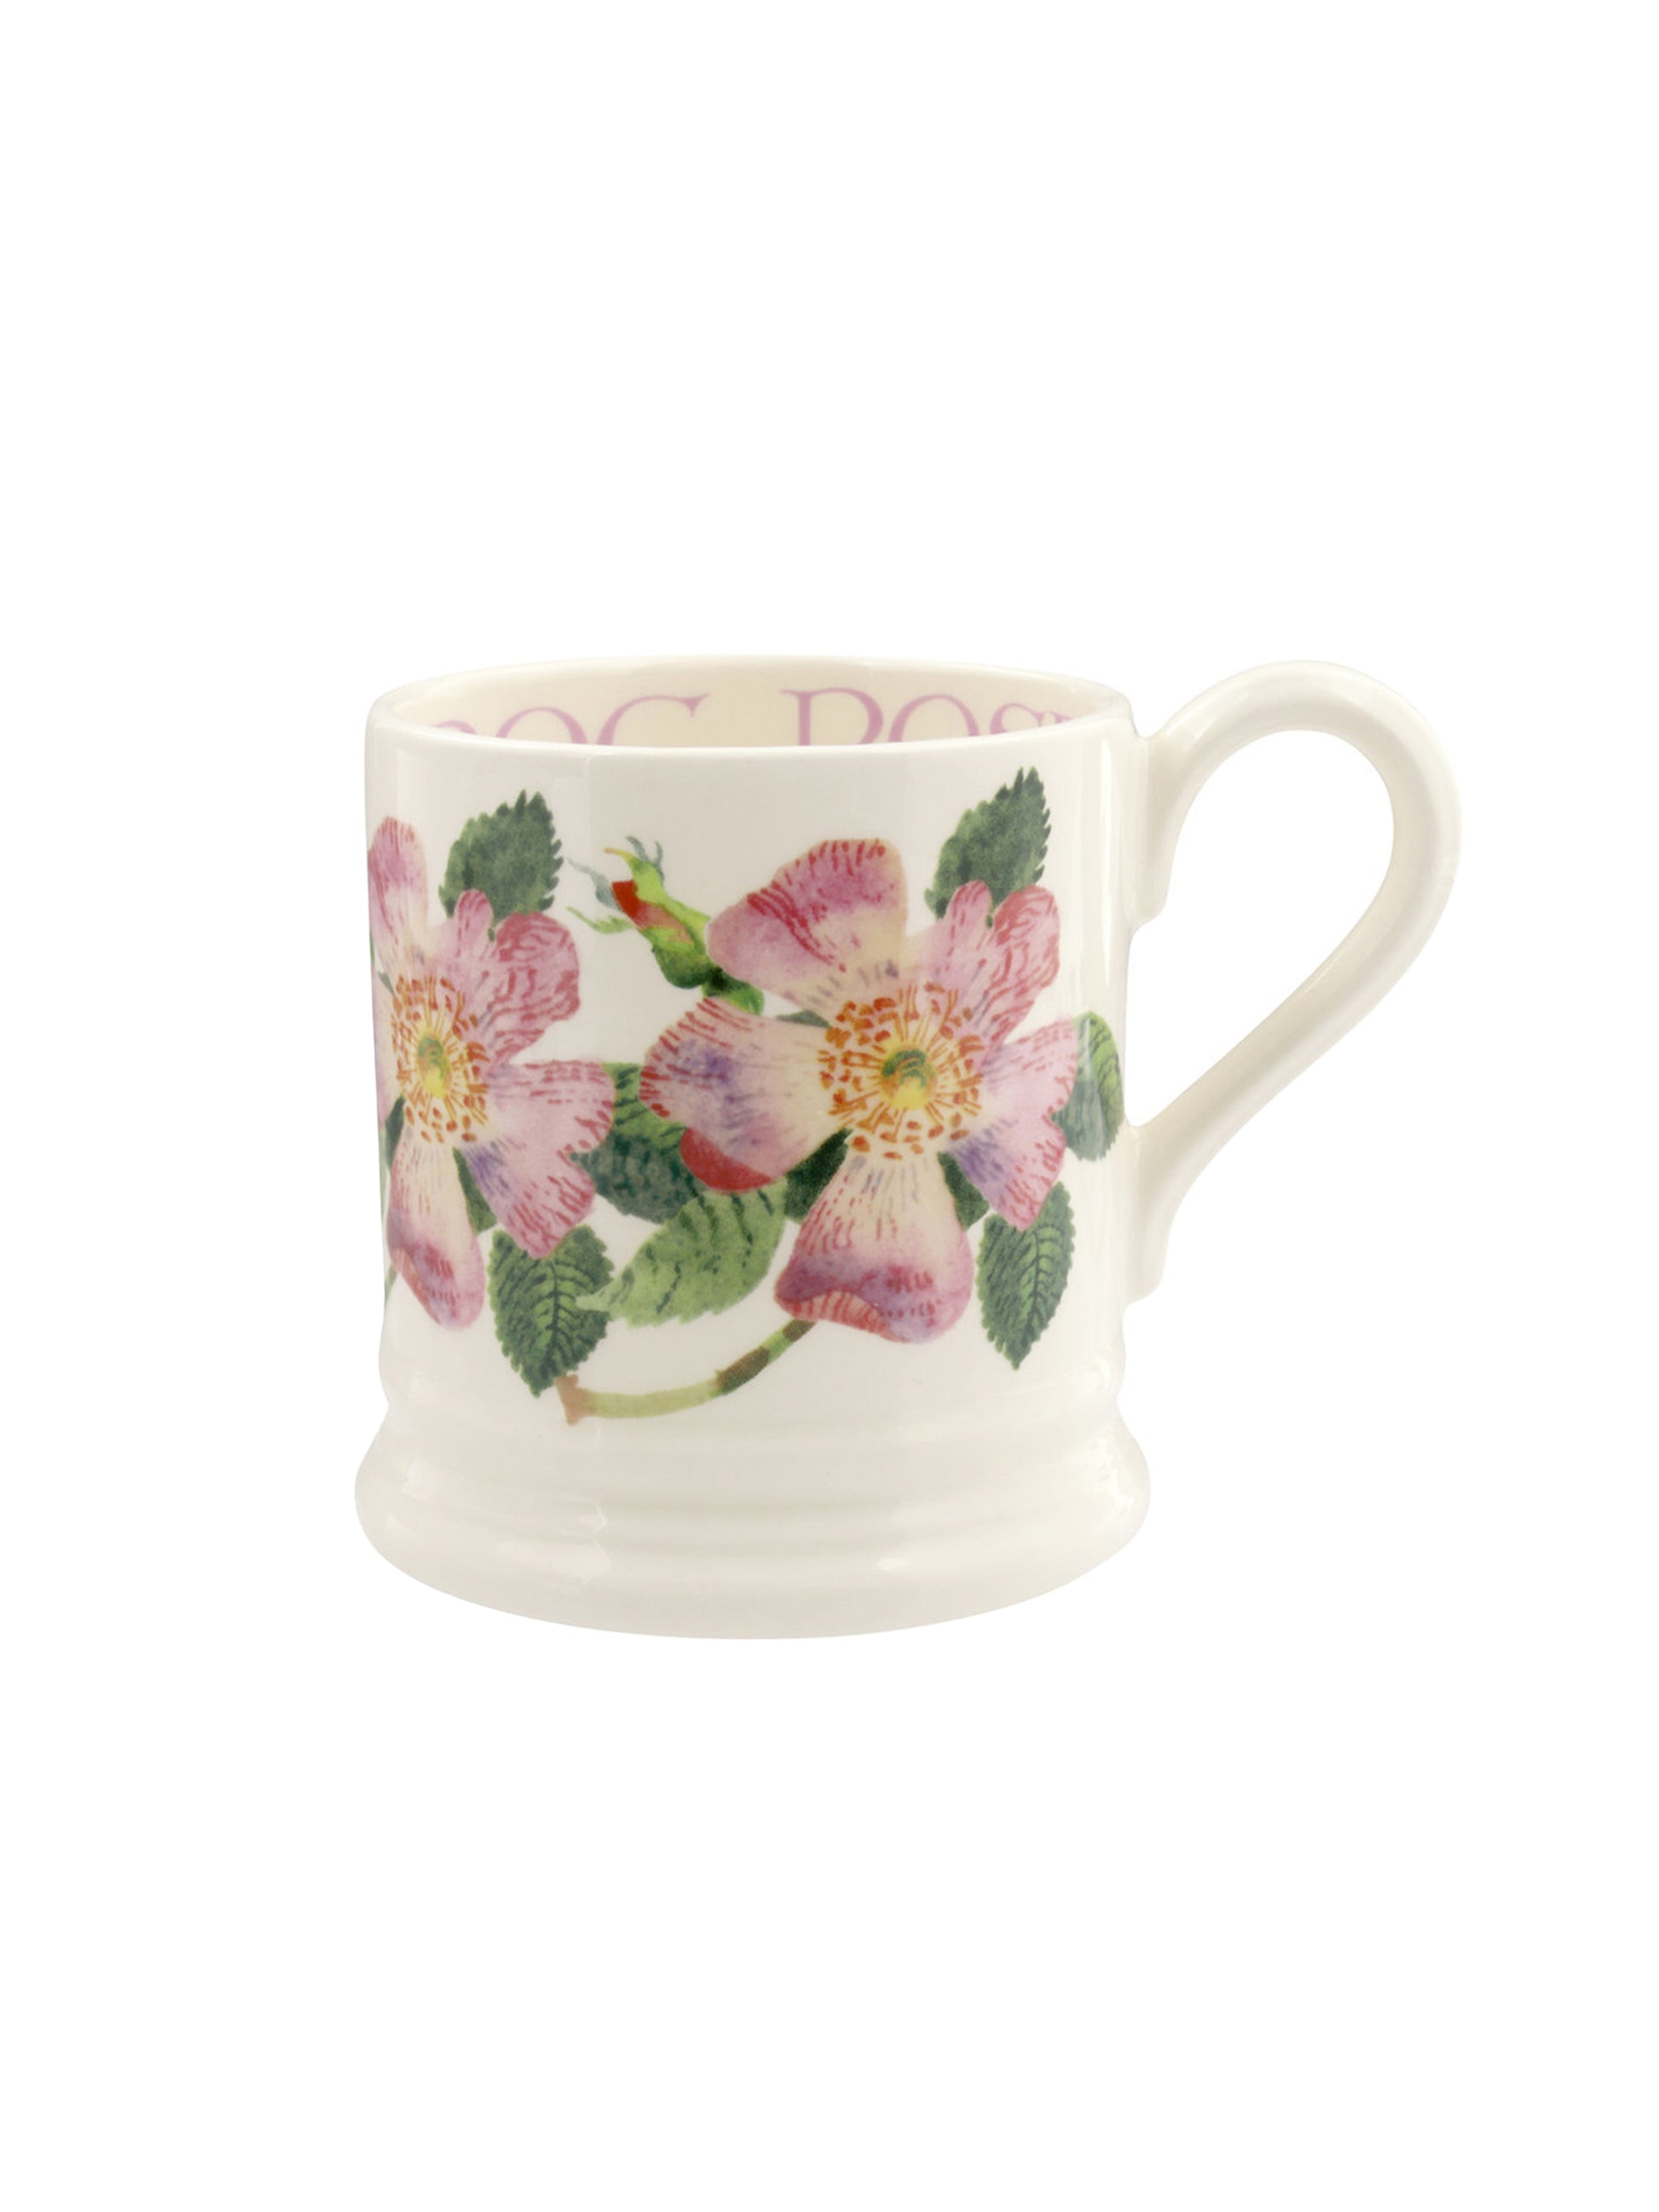 Emma Bridgewater gardening half pint mug – buy online or call 01454 312 547